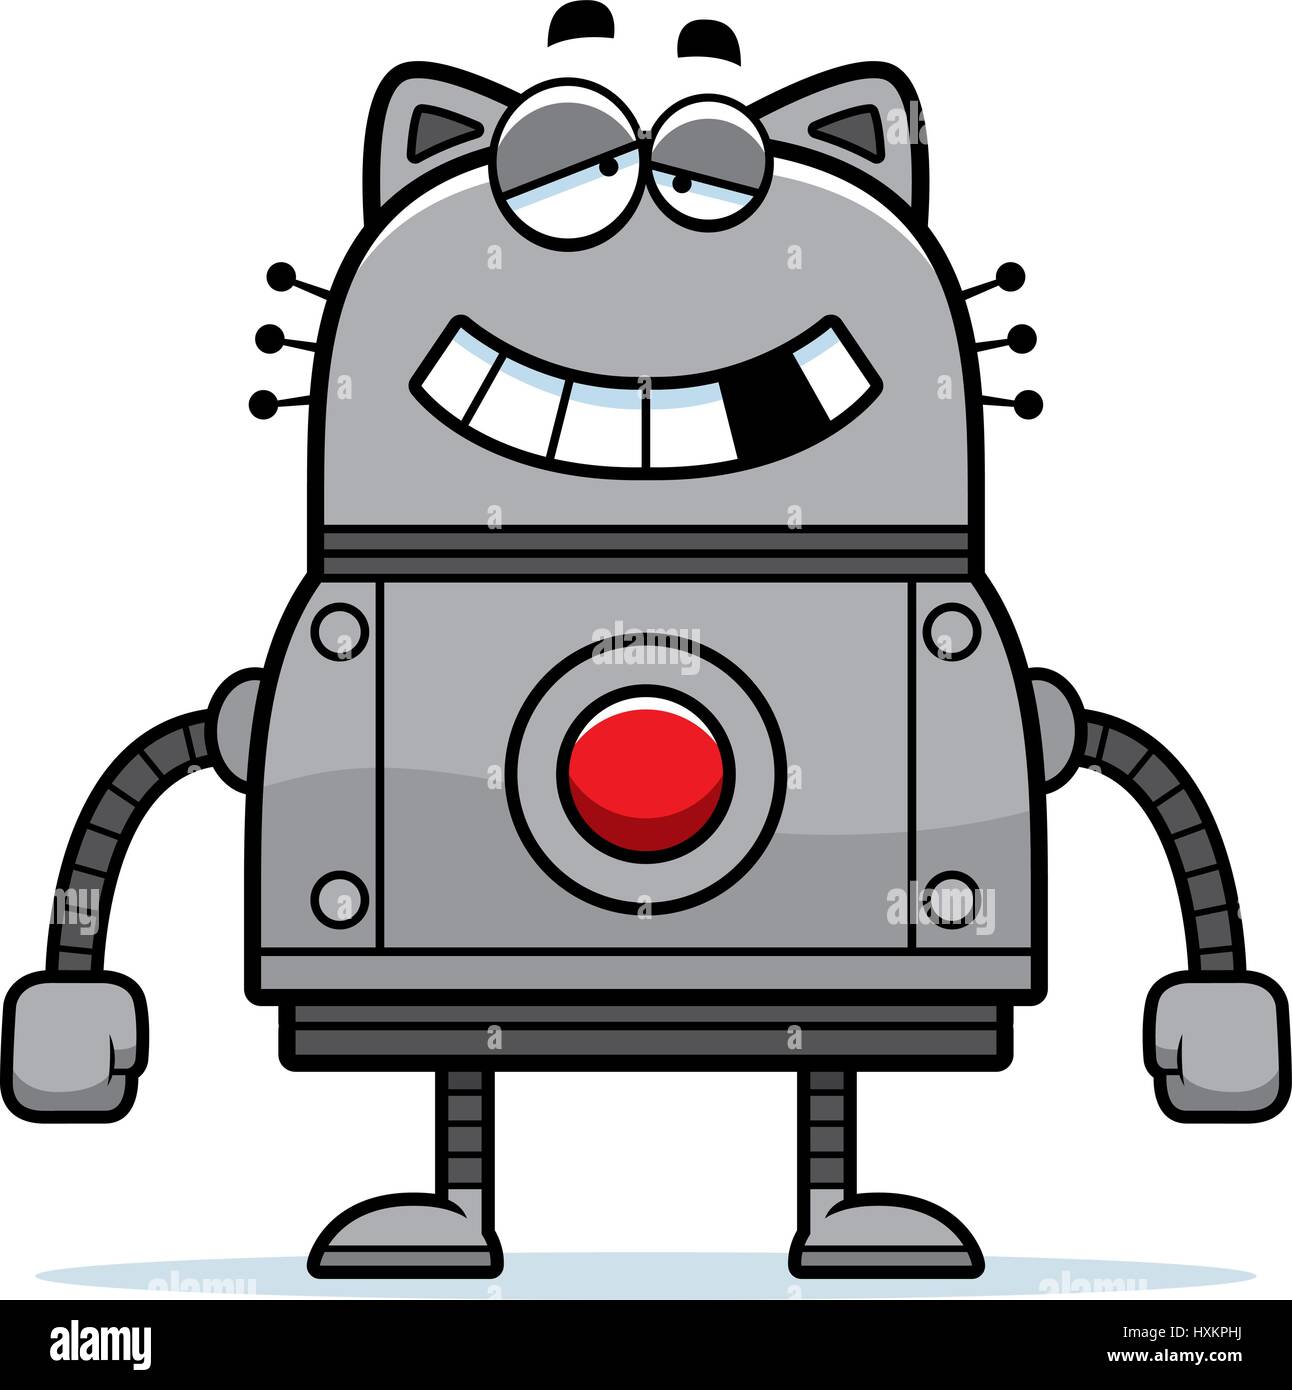 A cartoon illustration of a malfunctioning robot cat. Stock Vector